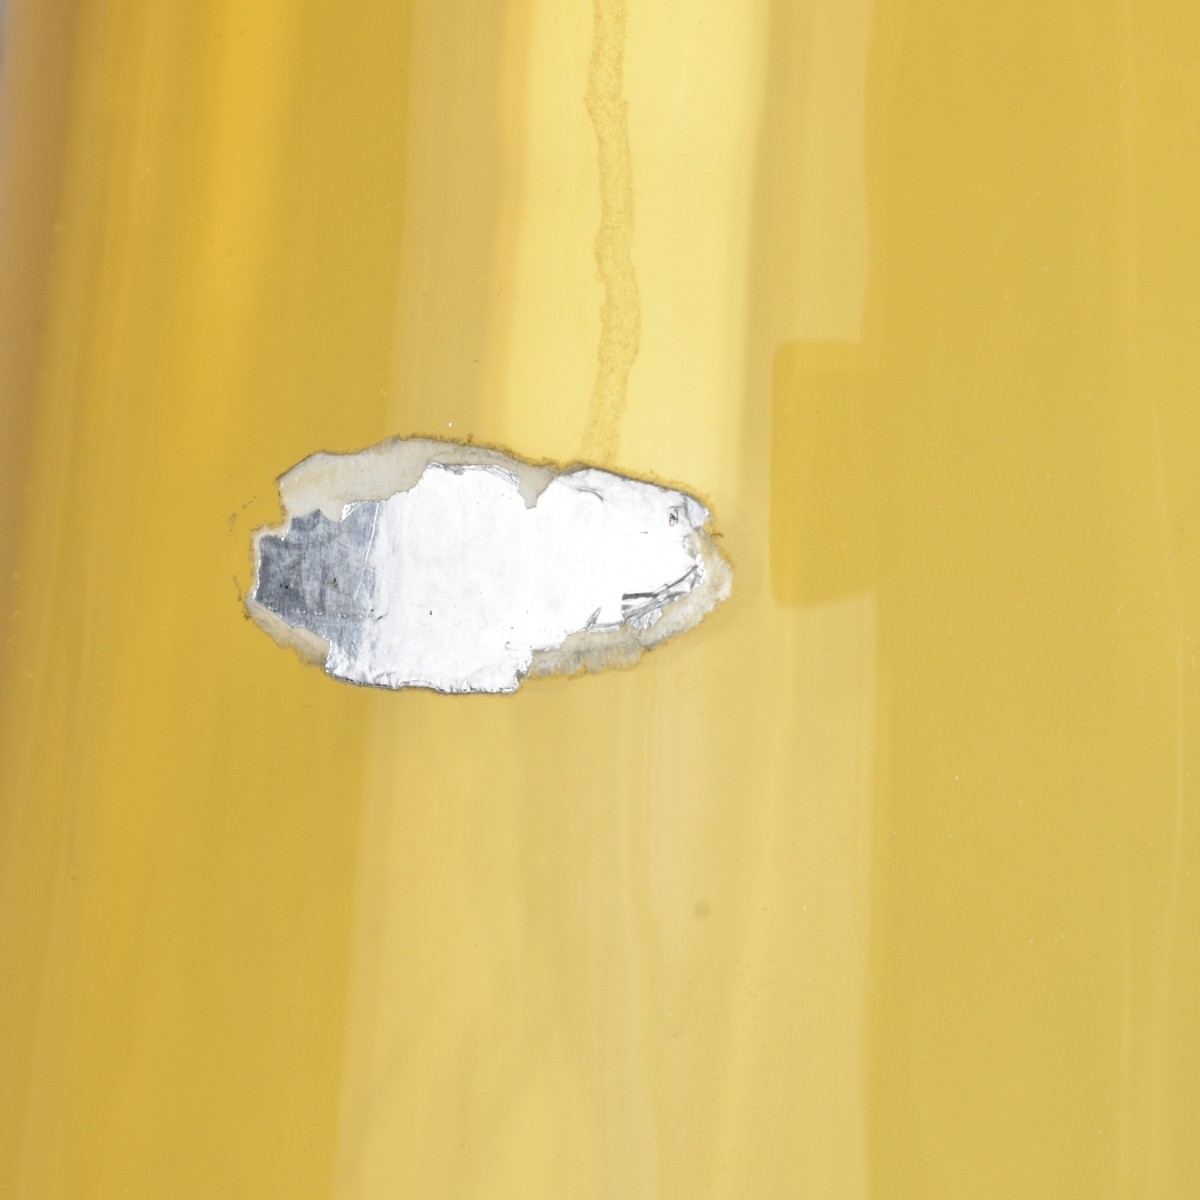 Blenko Art Glass Vessel with Stopper